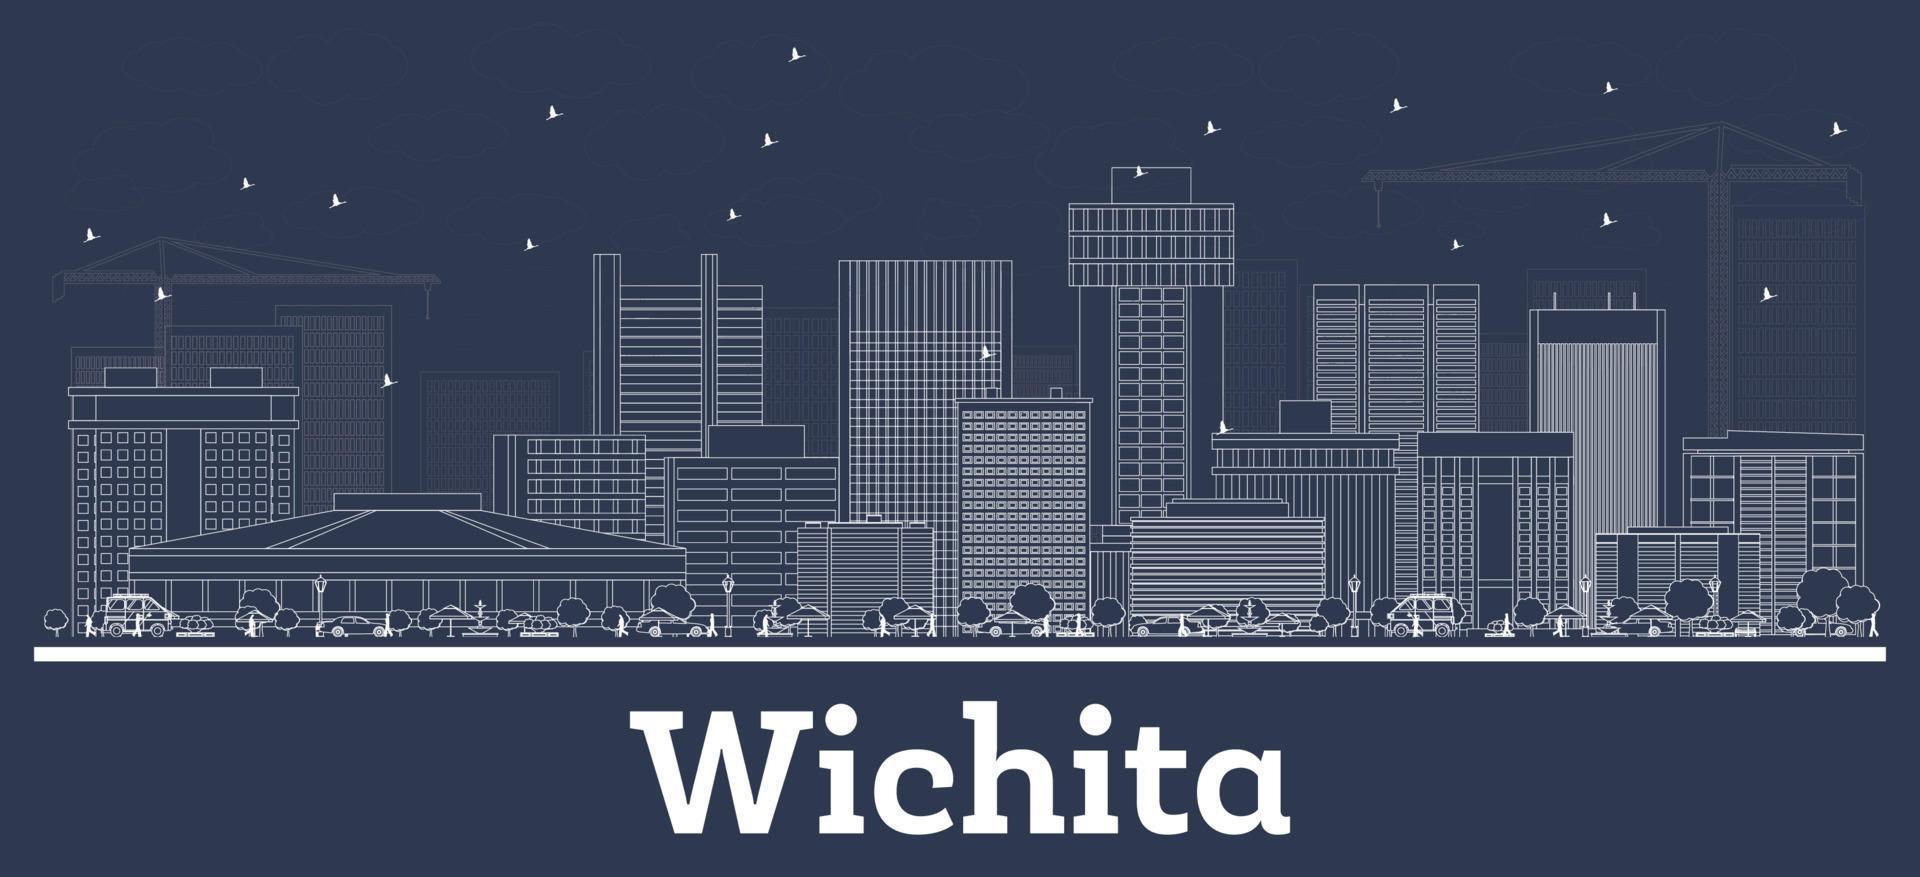 Outline Wichita Kansas City Skyline with White Buildings. vector